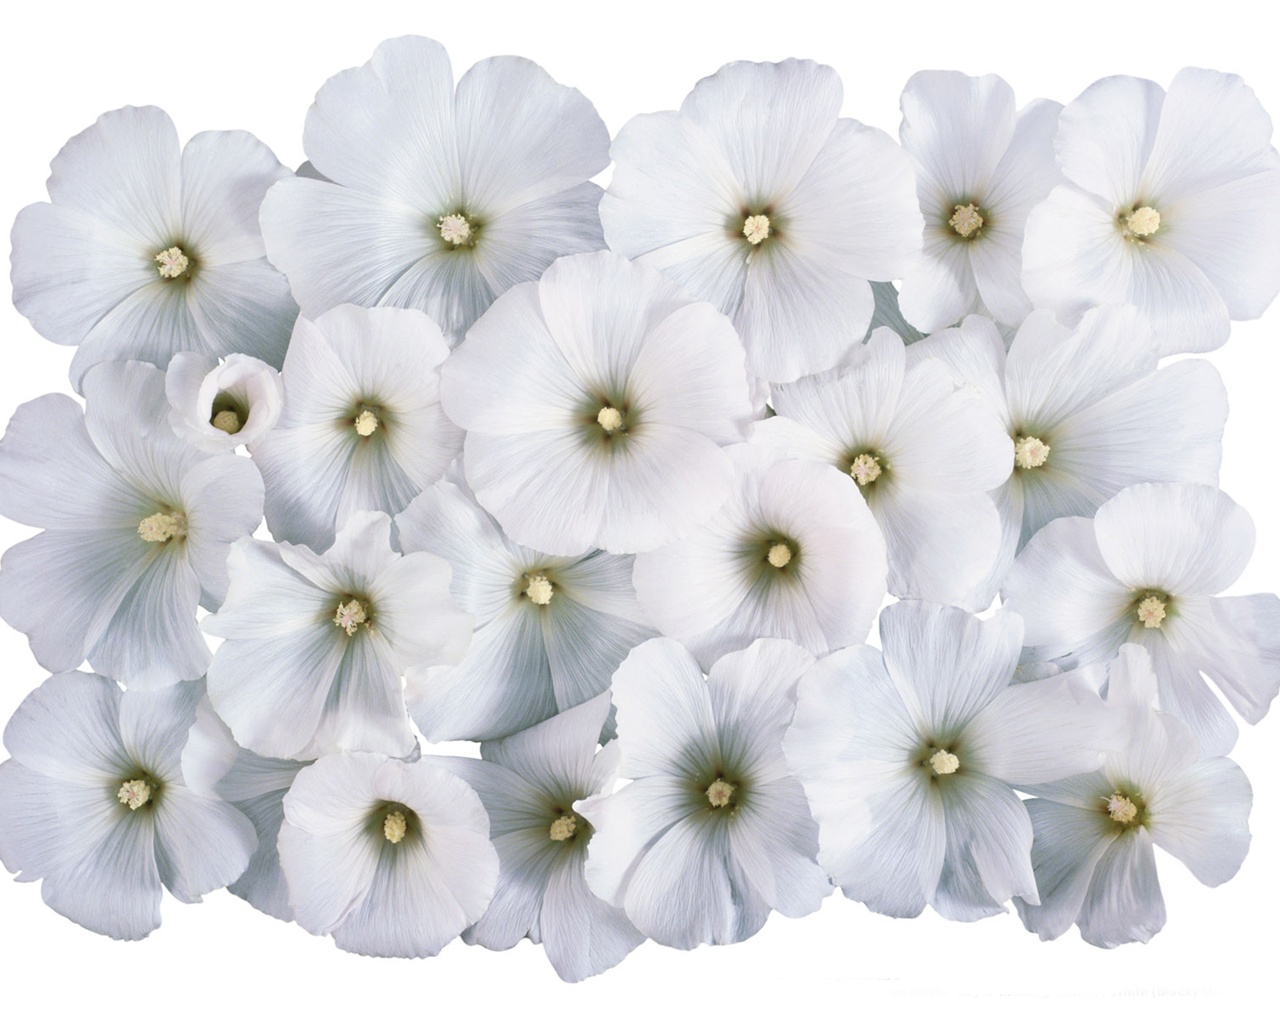 Snow-white flowers wallpaper #4 - 1280x1024